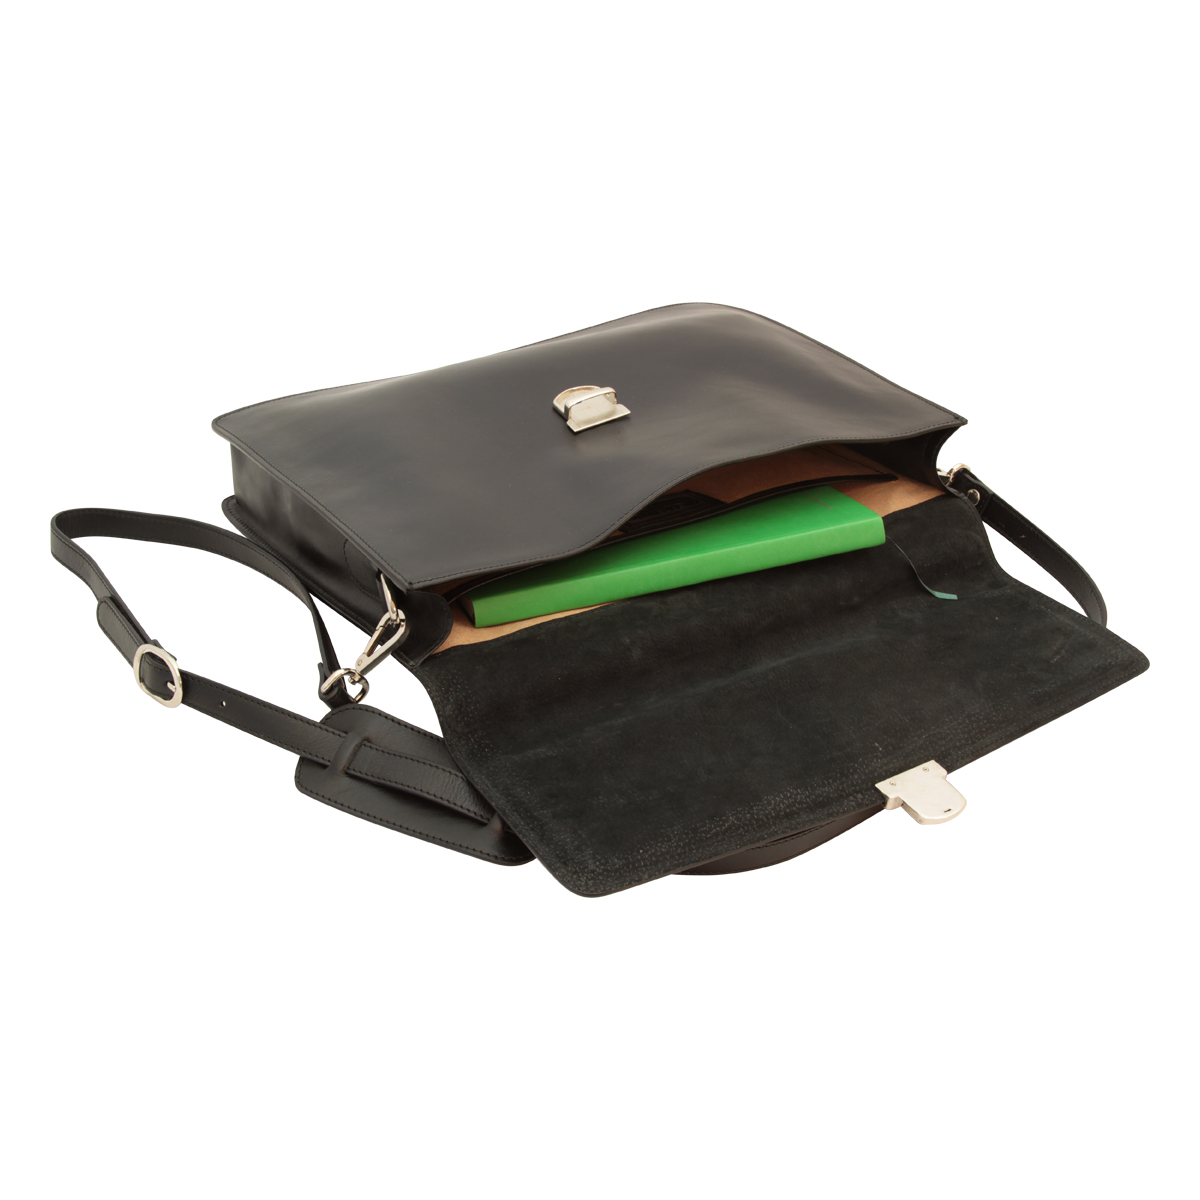 Business leather briefcase black | 407589NE US | Old Angler Firenze